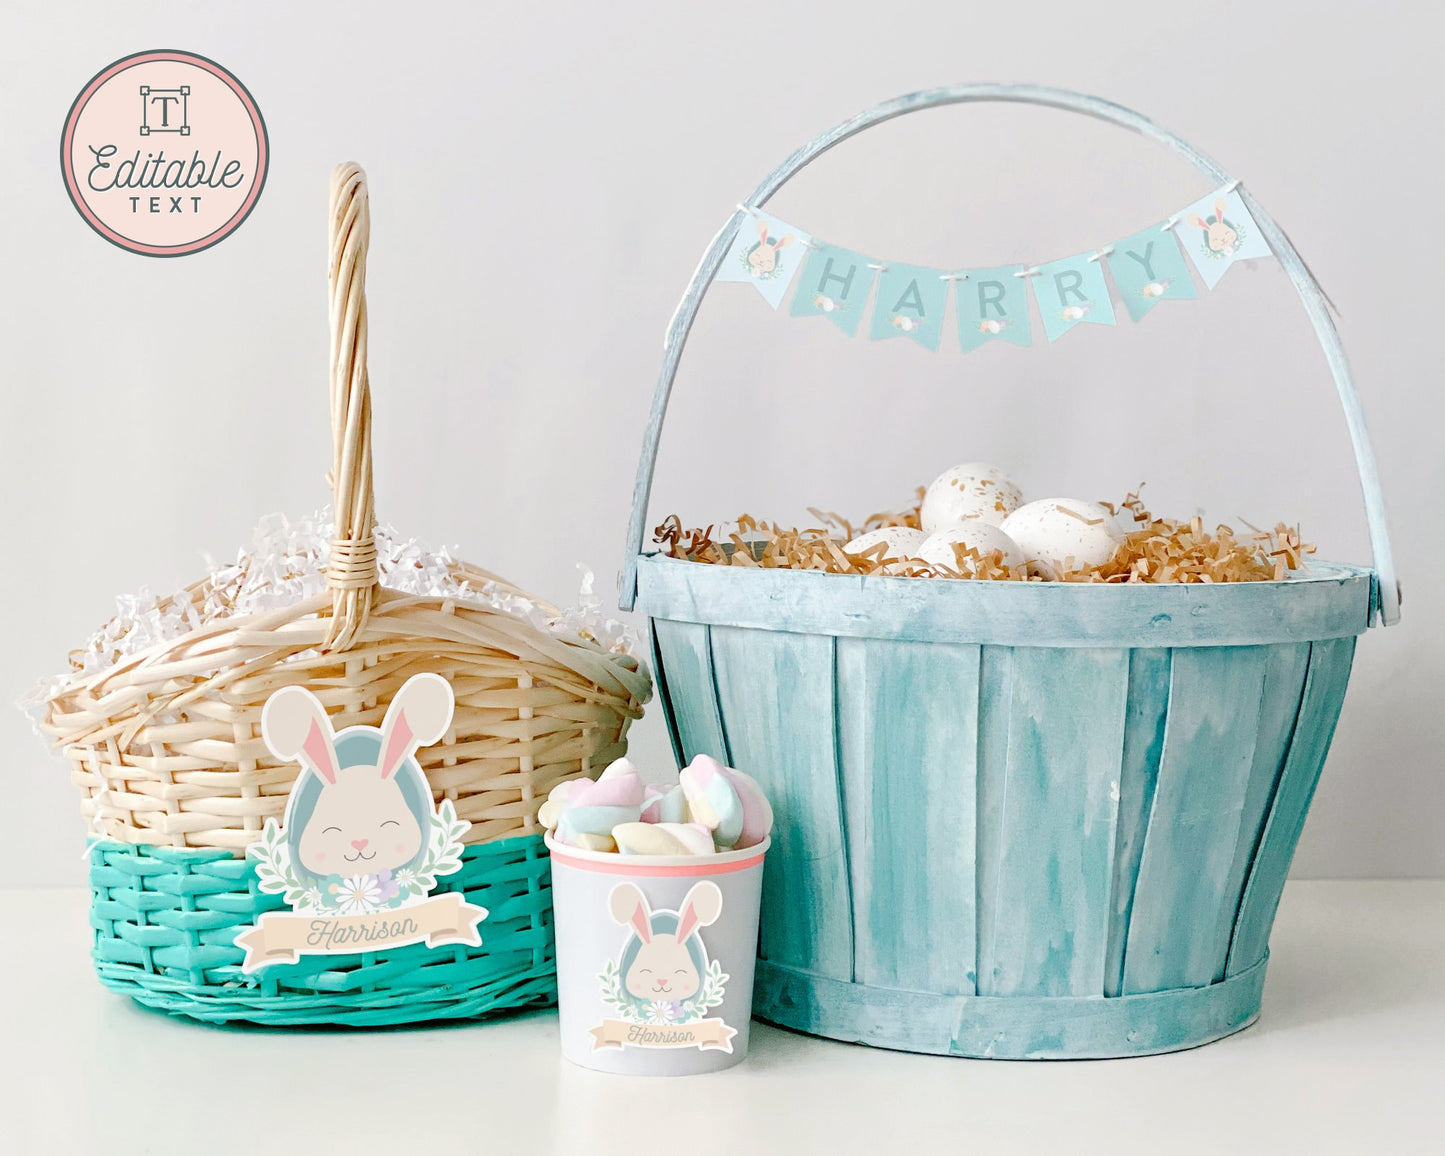 Personalized Easter Basket Name Tags  || Custom Printable Easter Basket Name Banner || Girl & Boy Easter Name Tags || Bunny Kisses || EA01